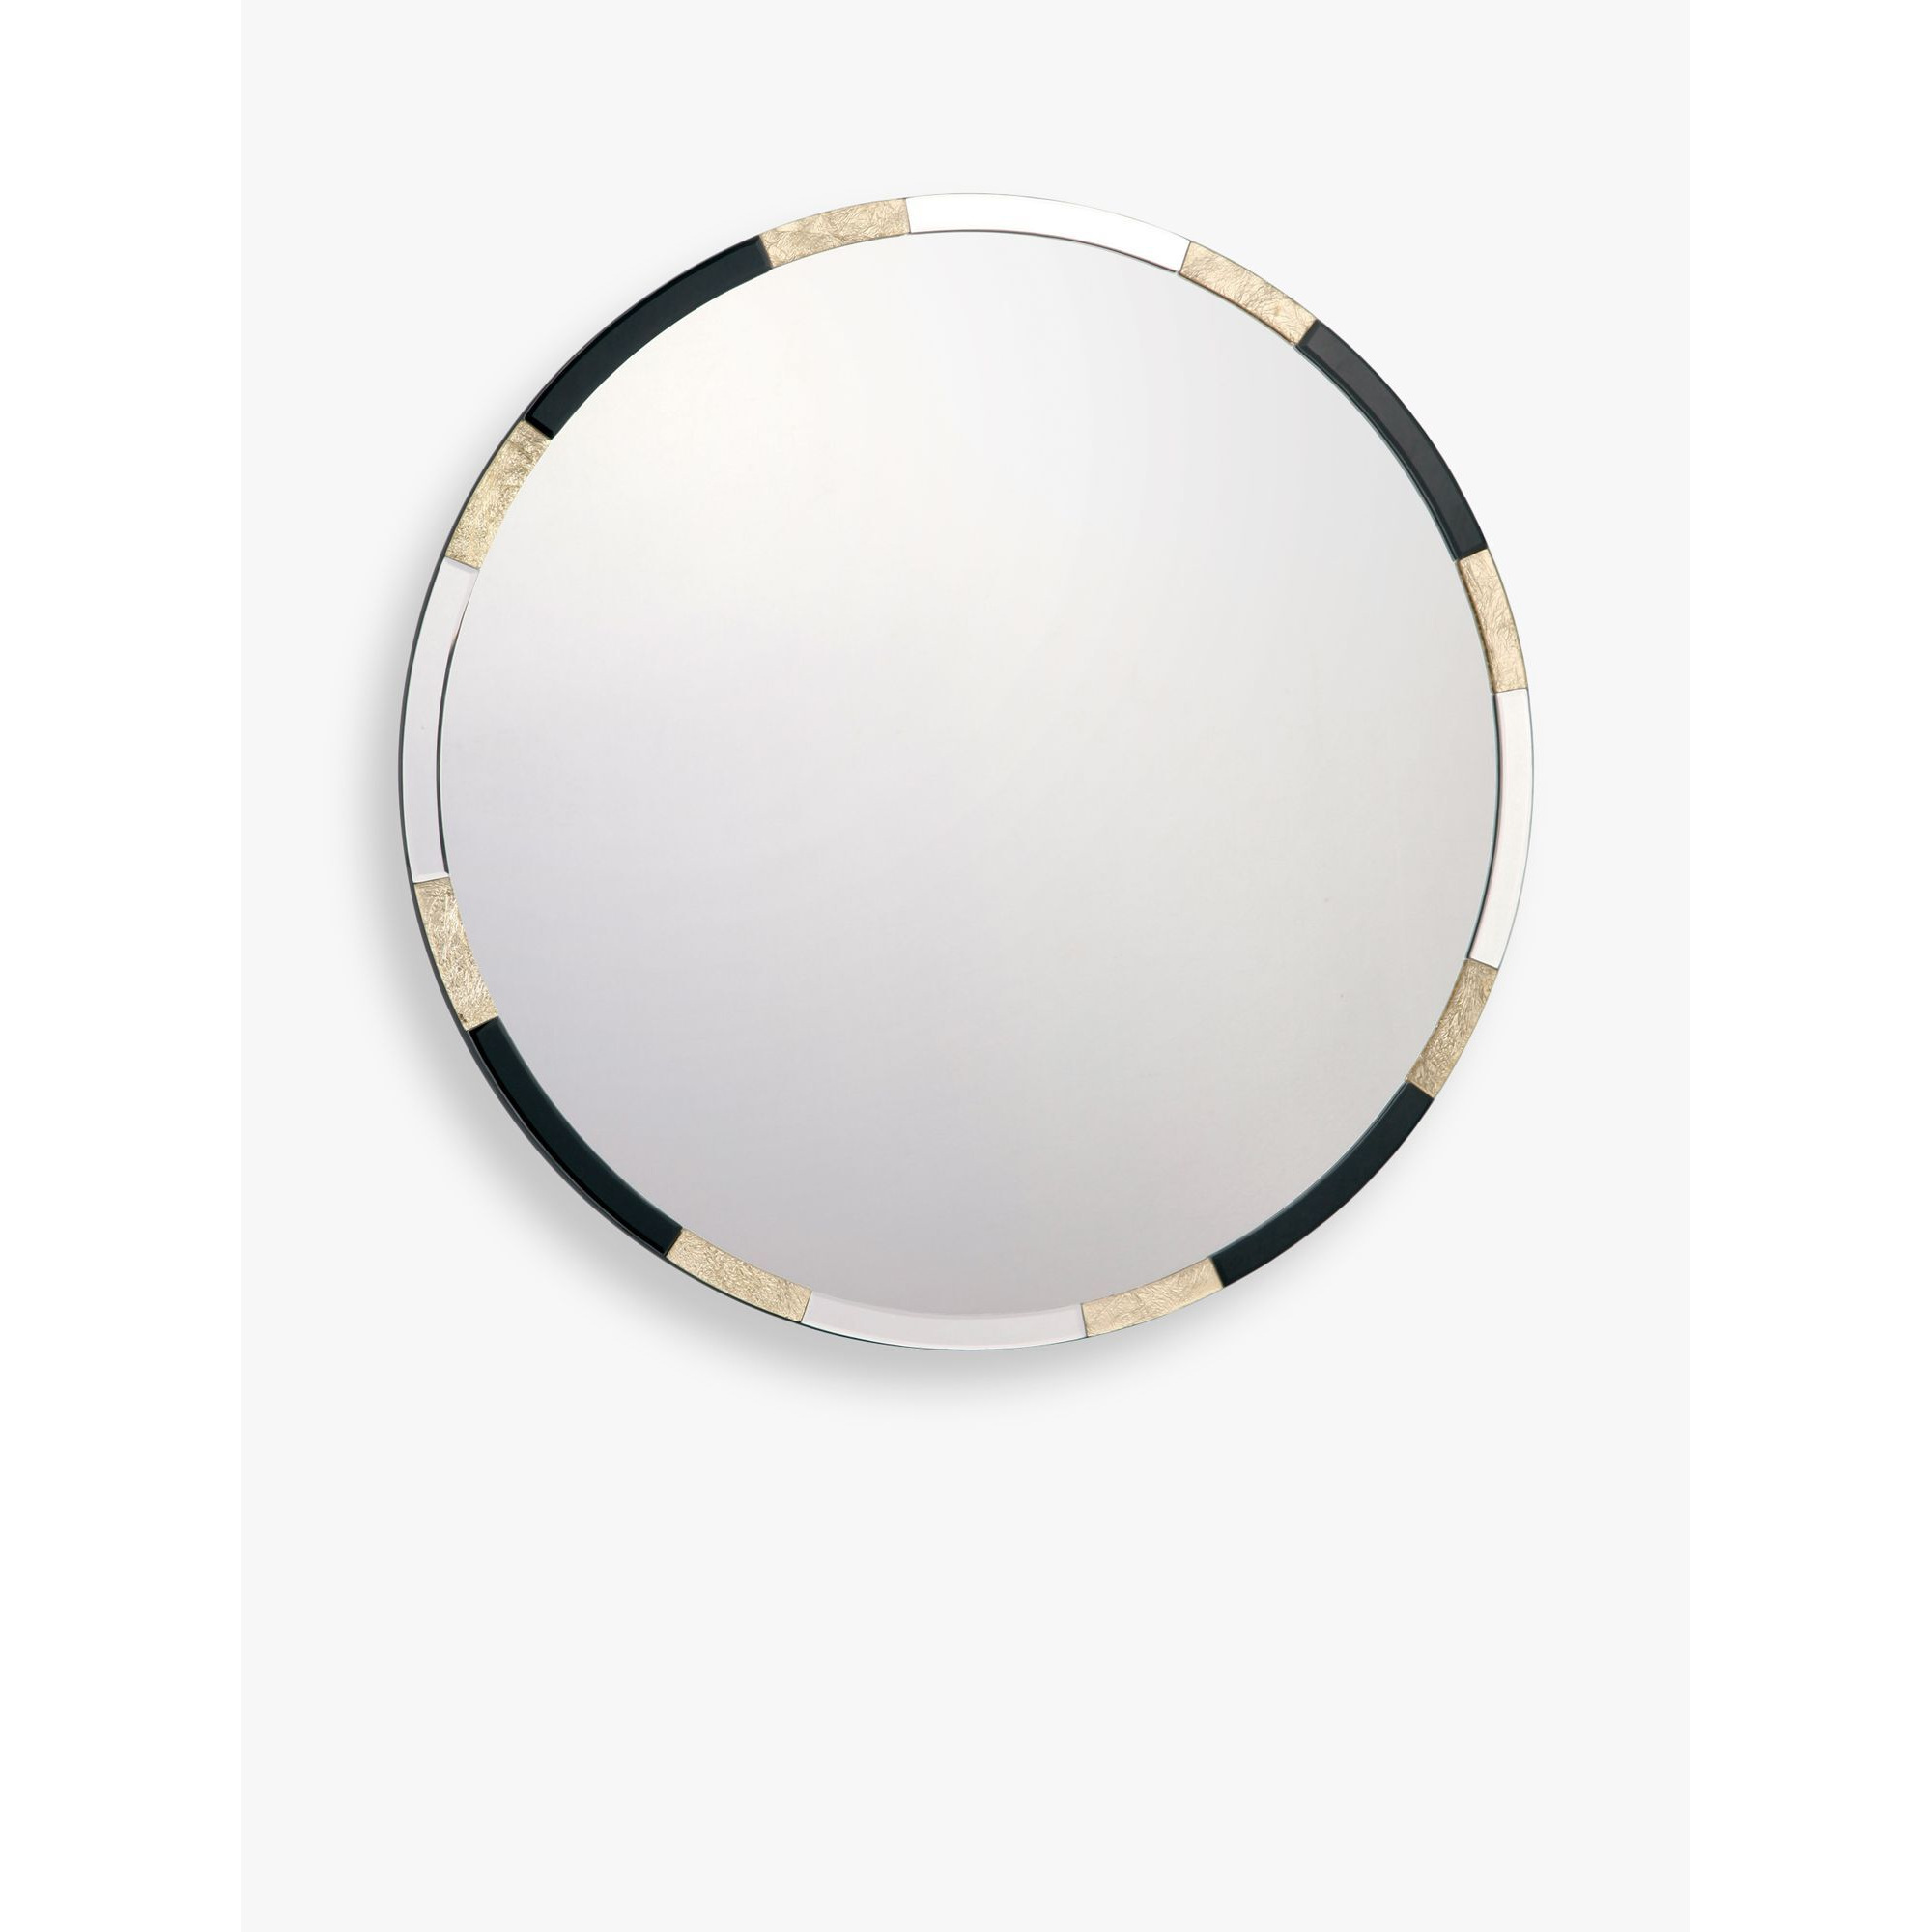 Där Gadany Round Wall Mirror, 80cm, Gold/Black - image 1